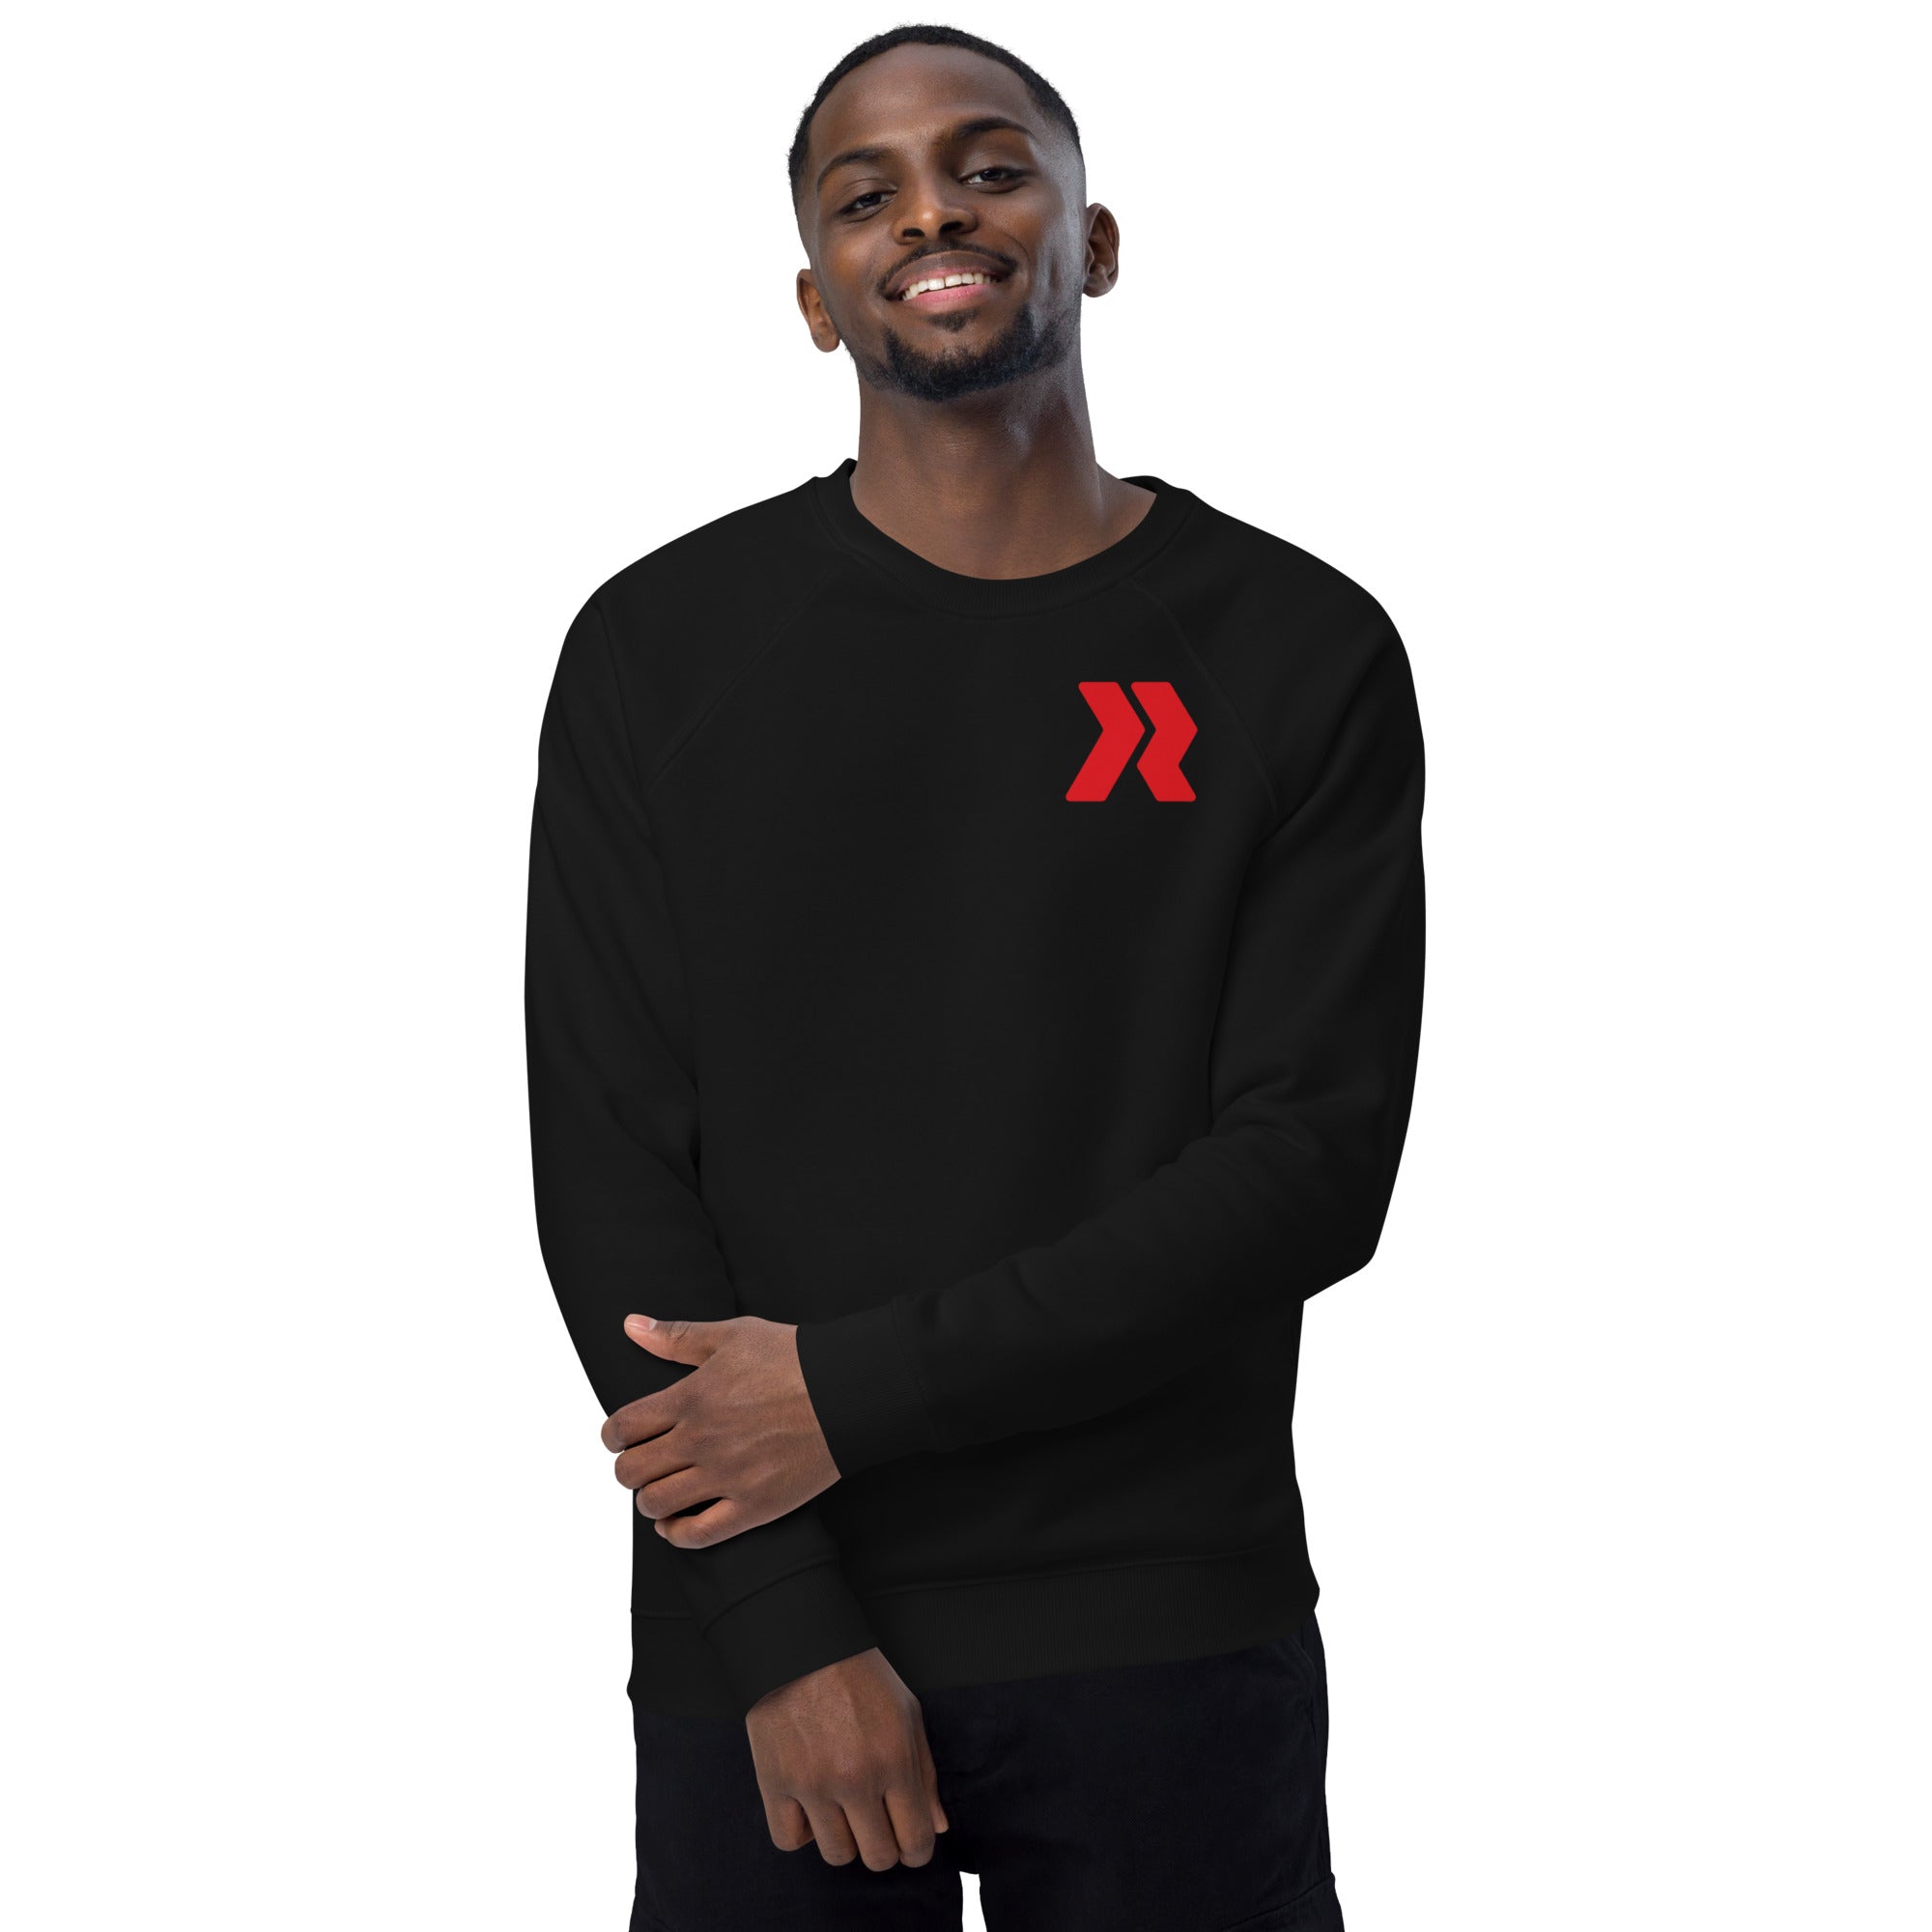 4s Logo Red - R/W Back - Black Unisex organic raglan sweatshirt